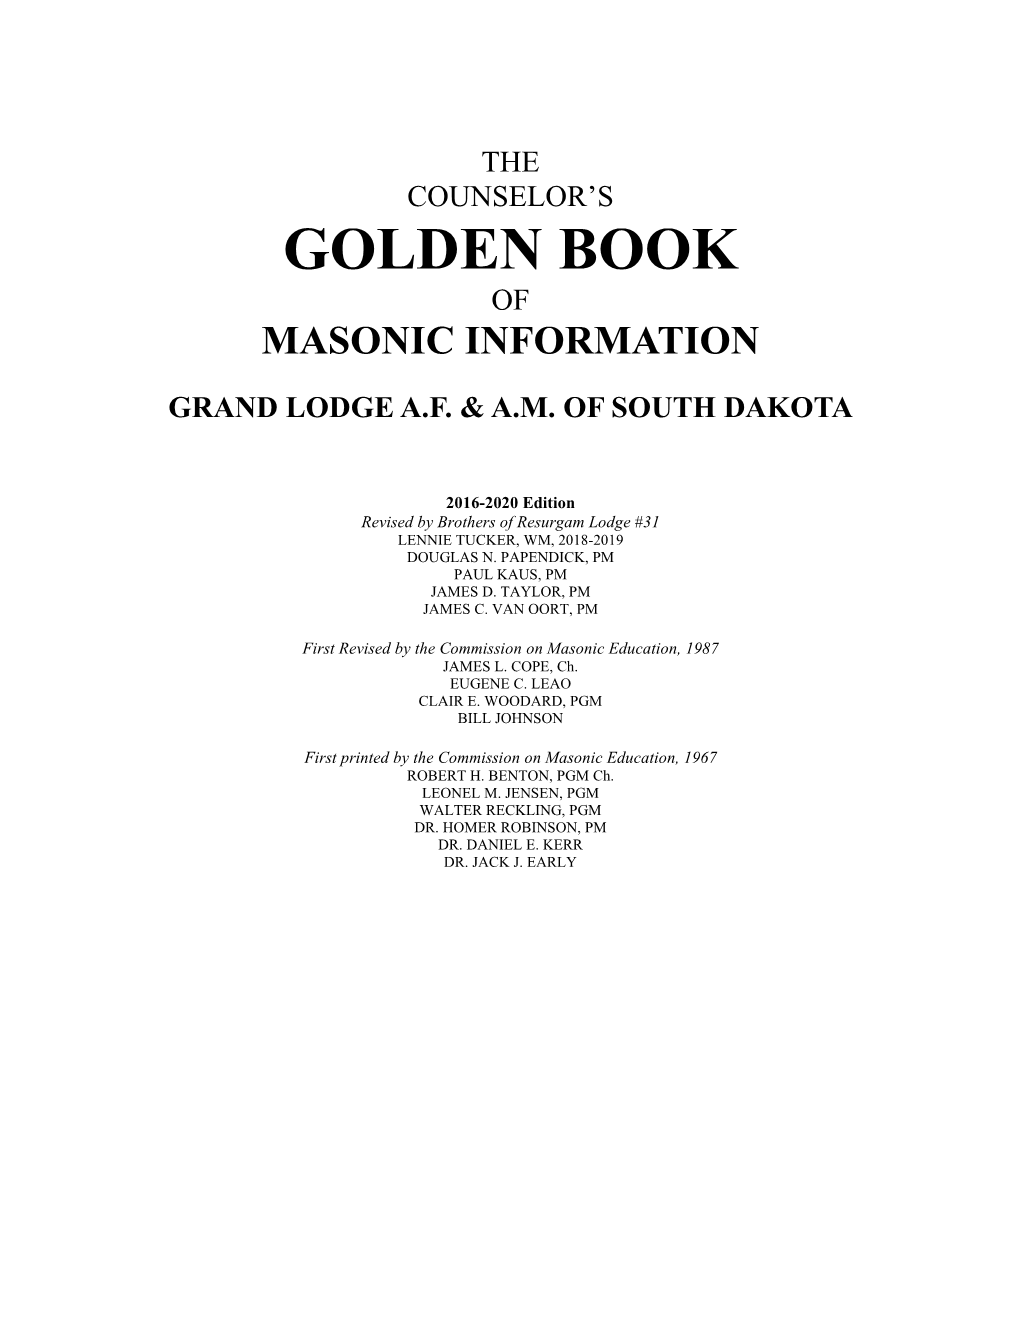 Golden Book of Masonic Information